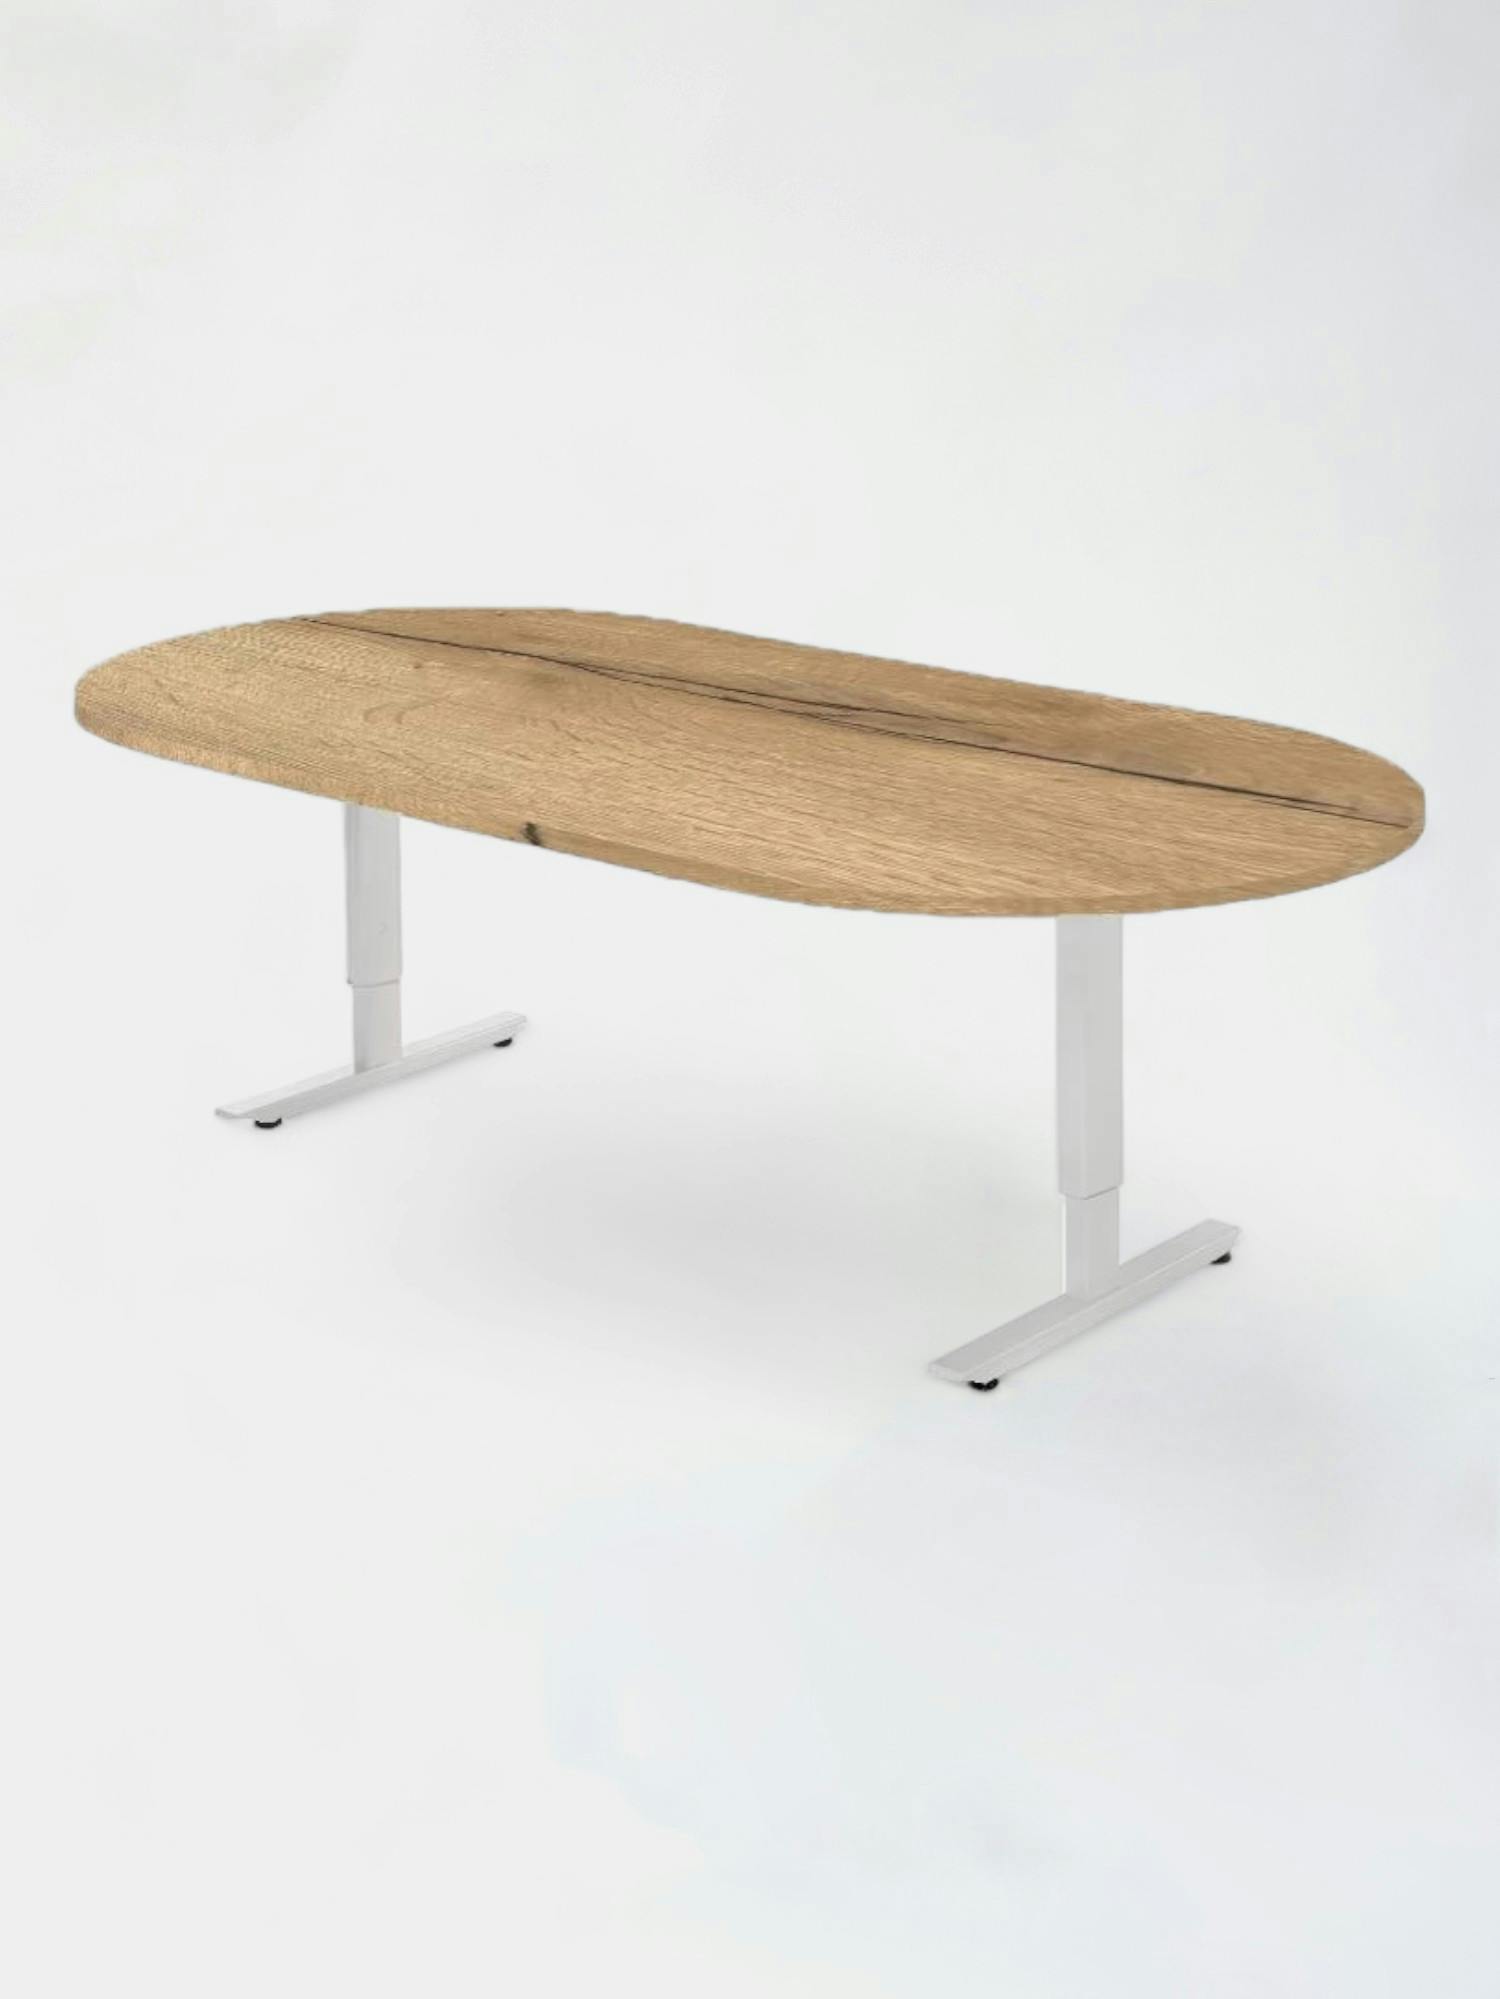 Ovale vergadertafel - Relieve Furniture